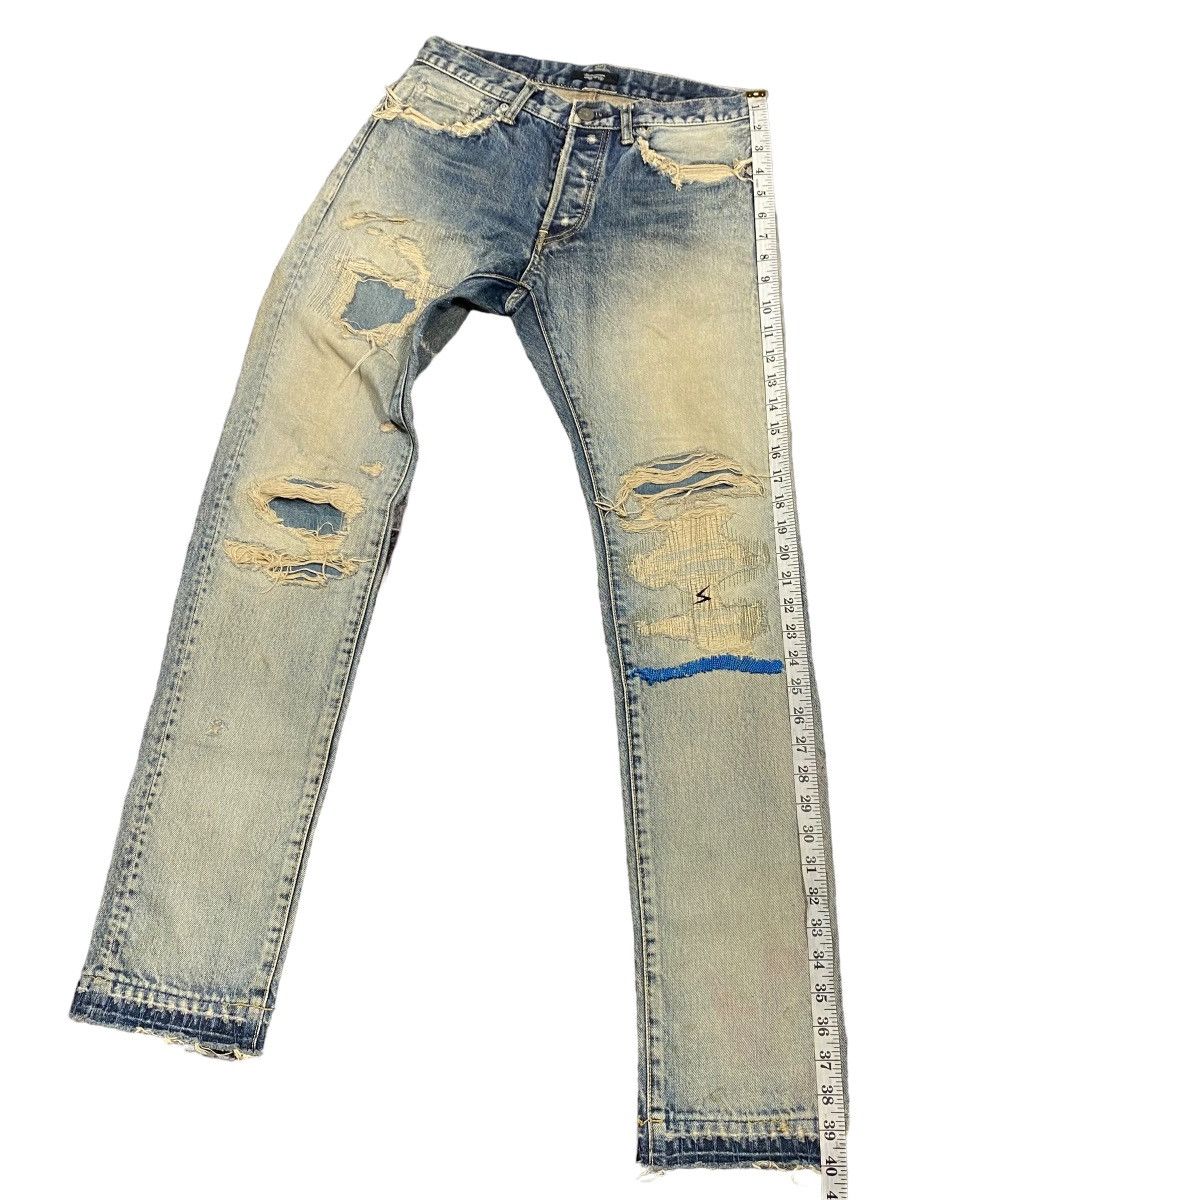 ❗️❗️❗️Rare Item Undercover 68 Blue Yarn Jeans - 24